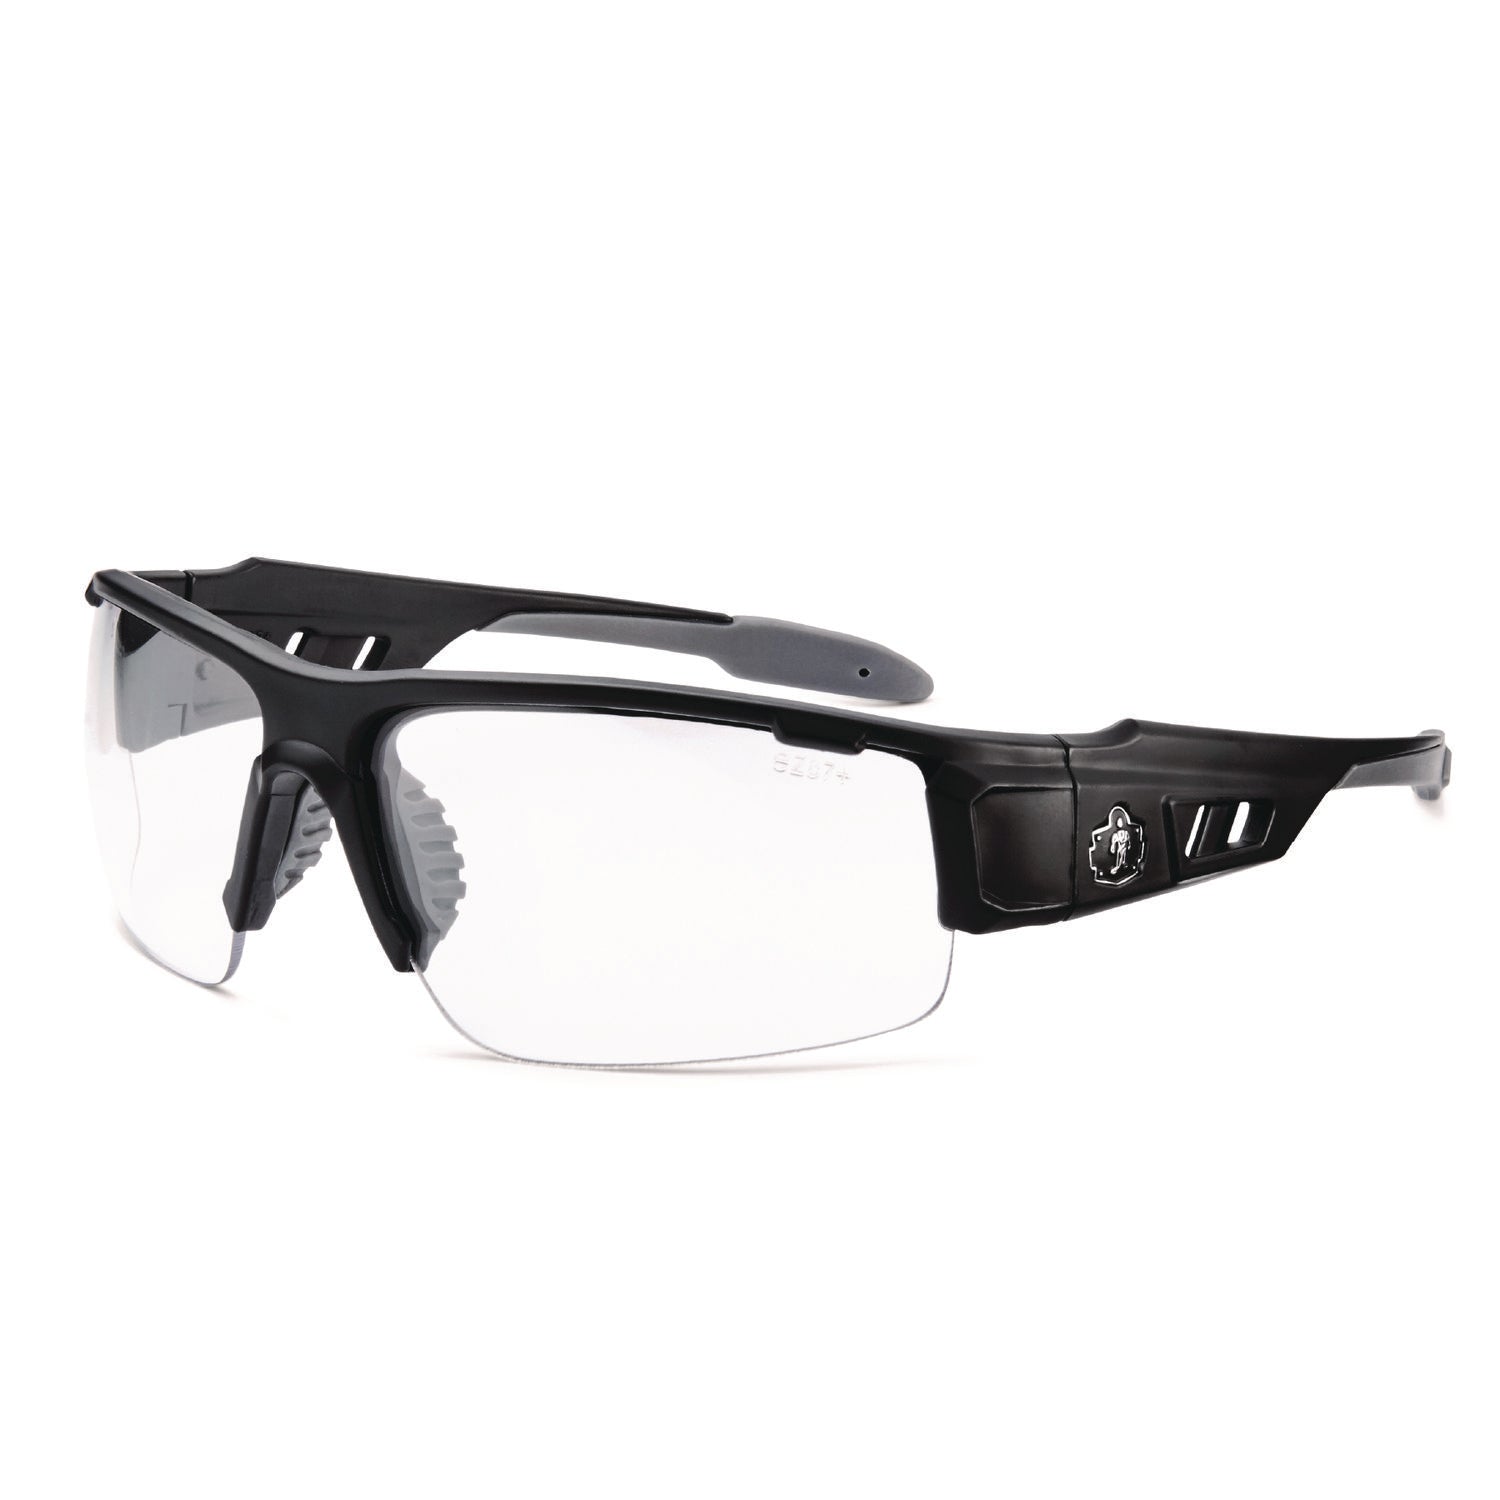 skullerz-dagr-anti-scratch-and-enhanced-anti-fog-safety-glasses-black-frame-clear-polycarbonate-lens-ships-in-1-3-bus-days_ego52005 - 1